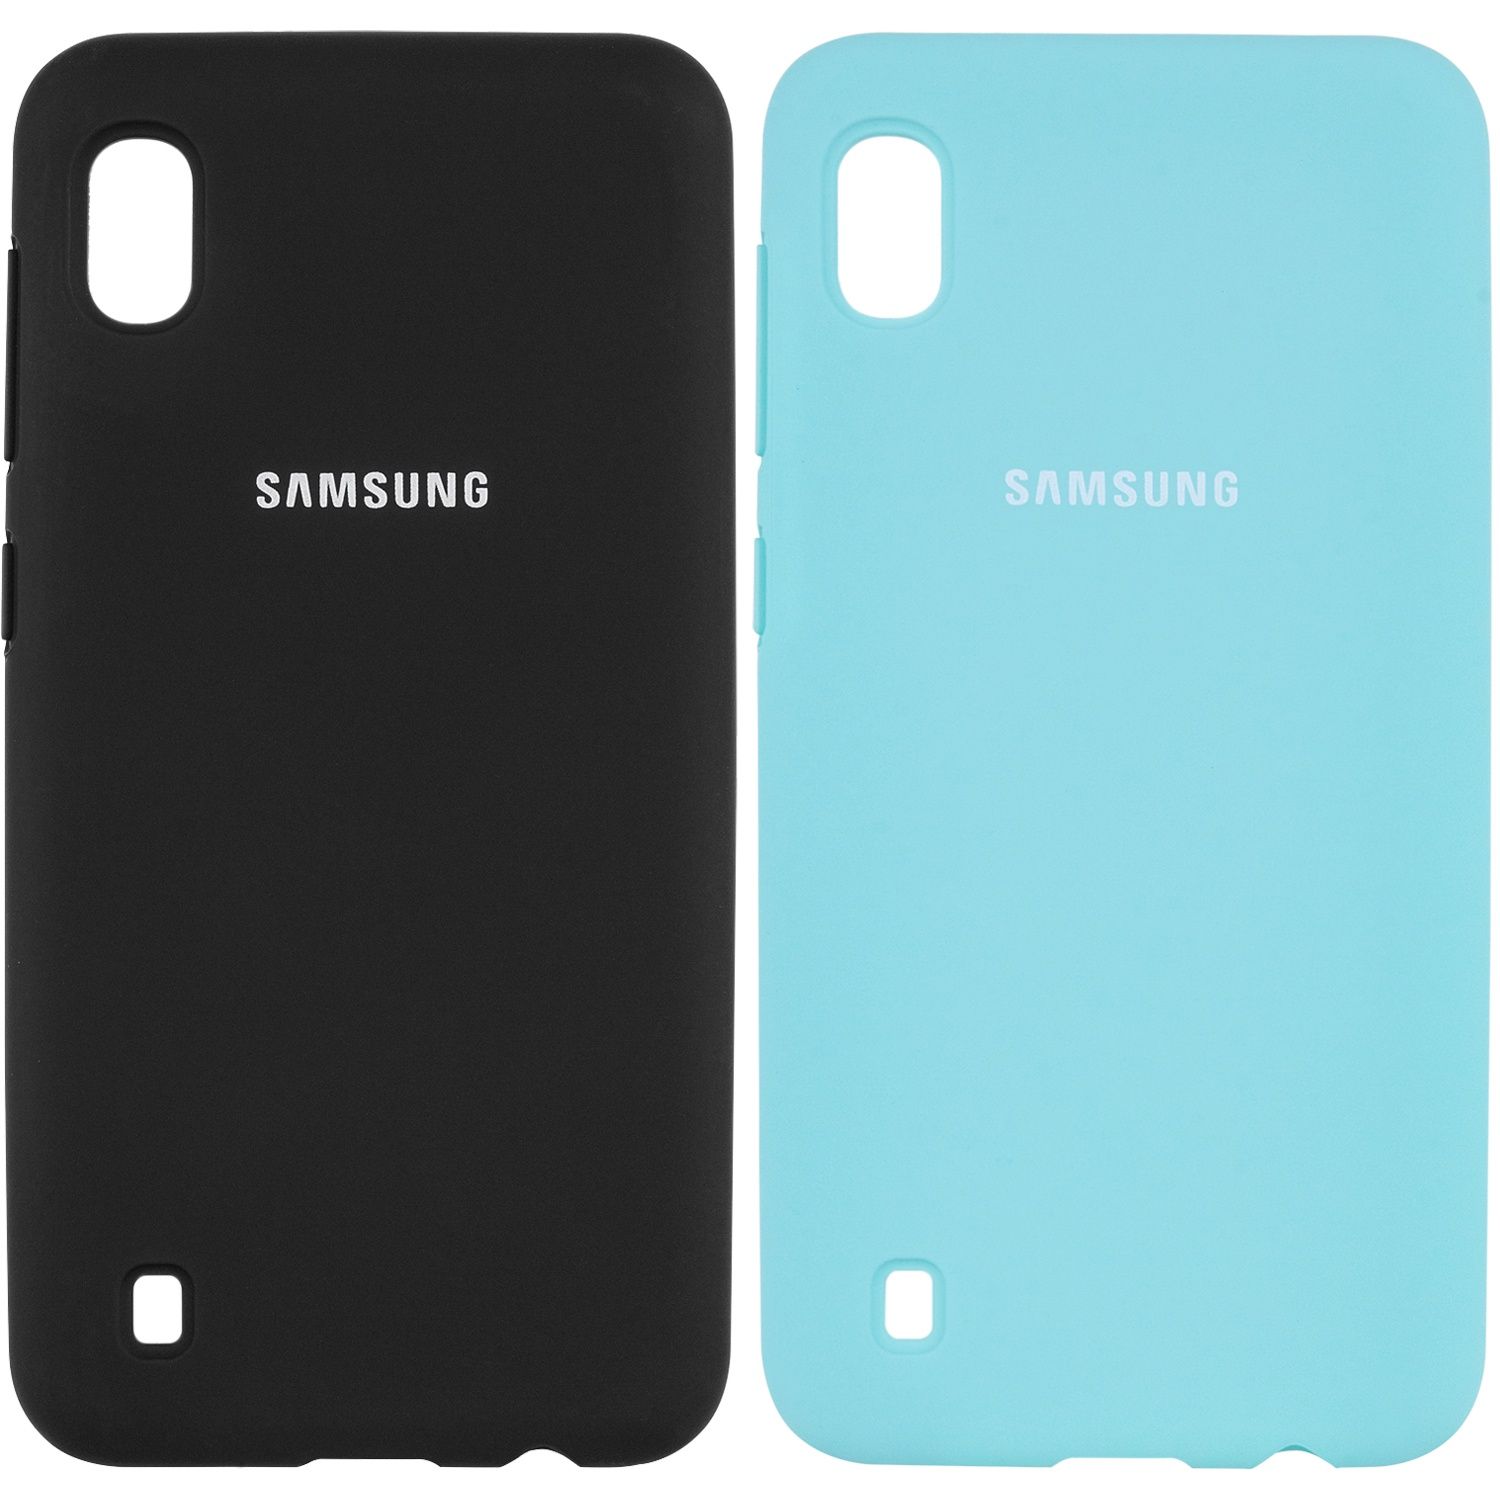 Samsung A10 Samsung A10s silicone cover